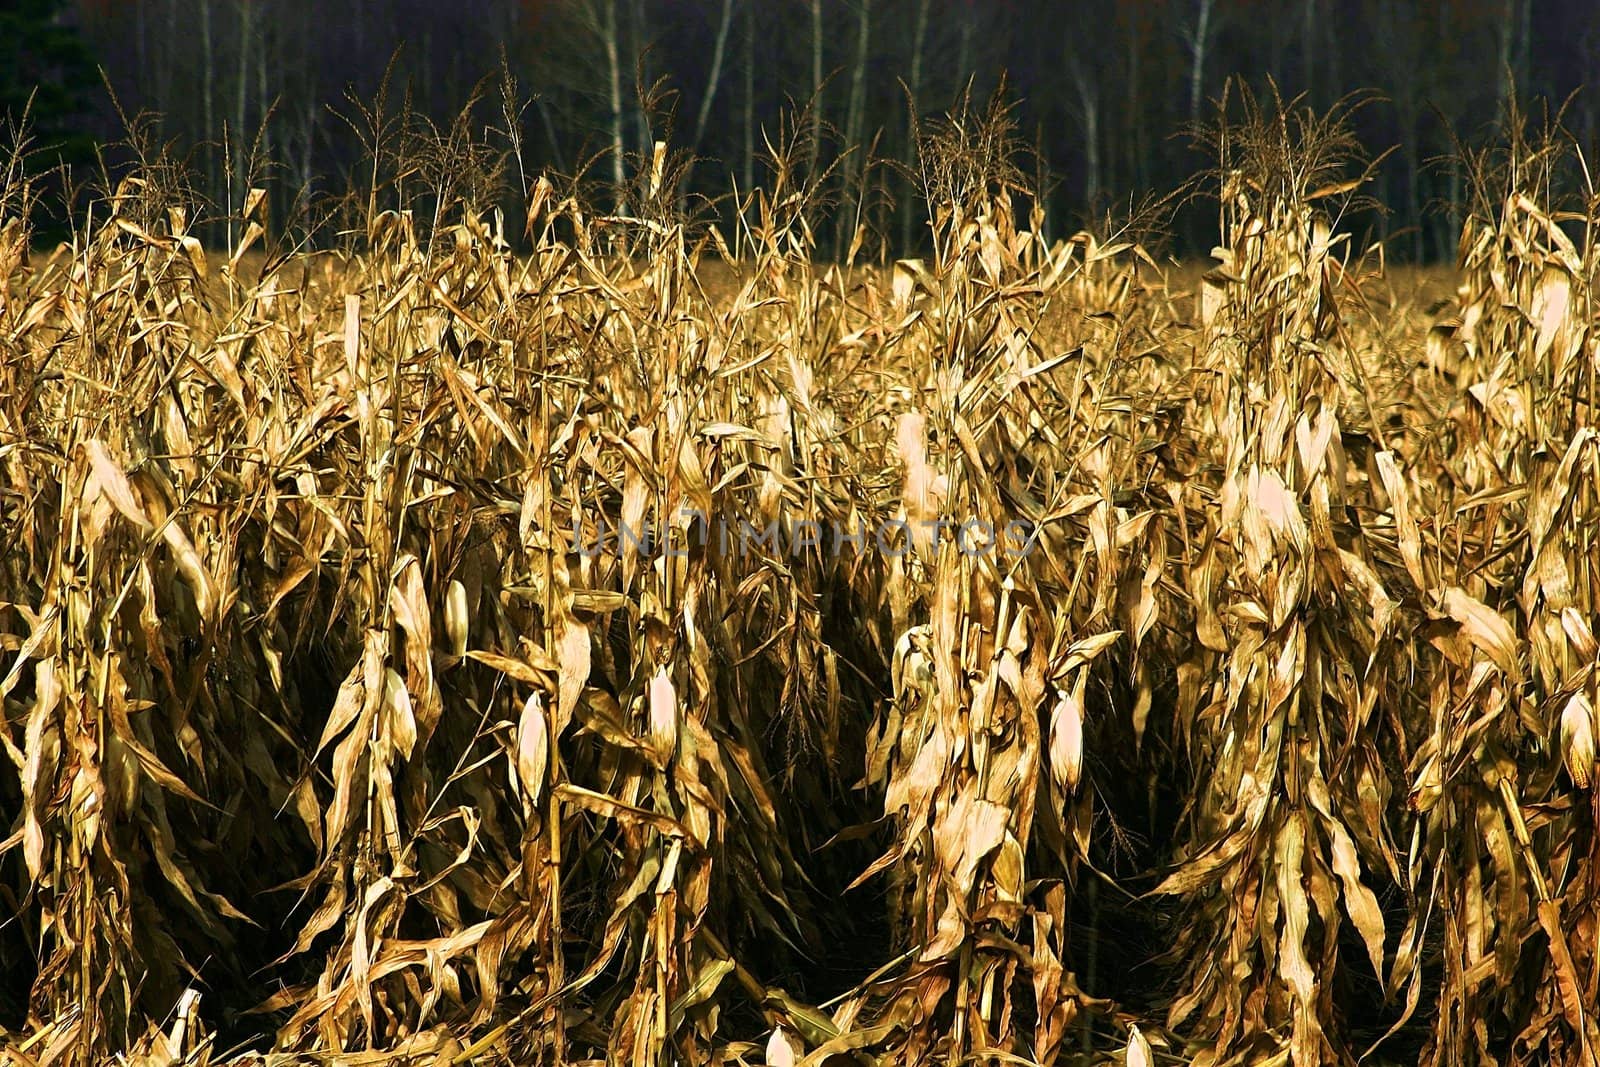 Road side dried corn field in the fall